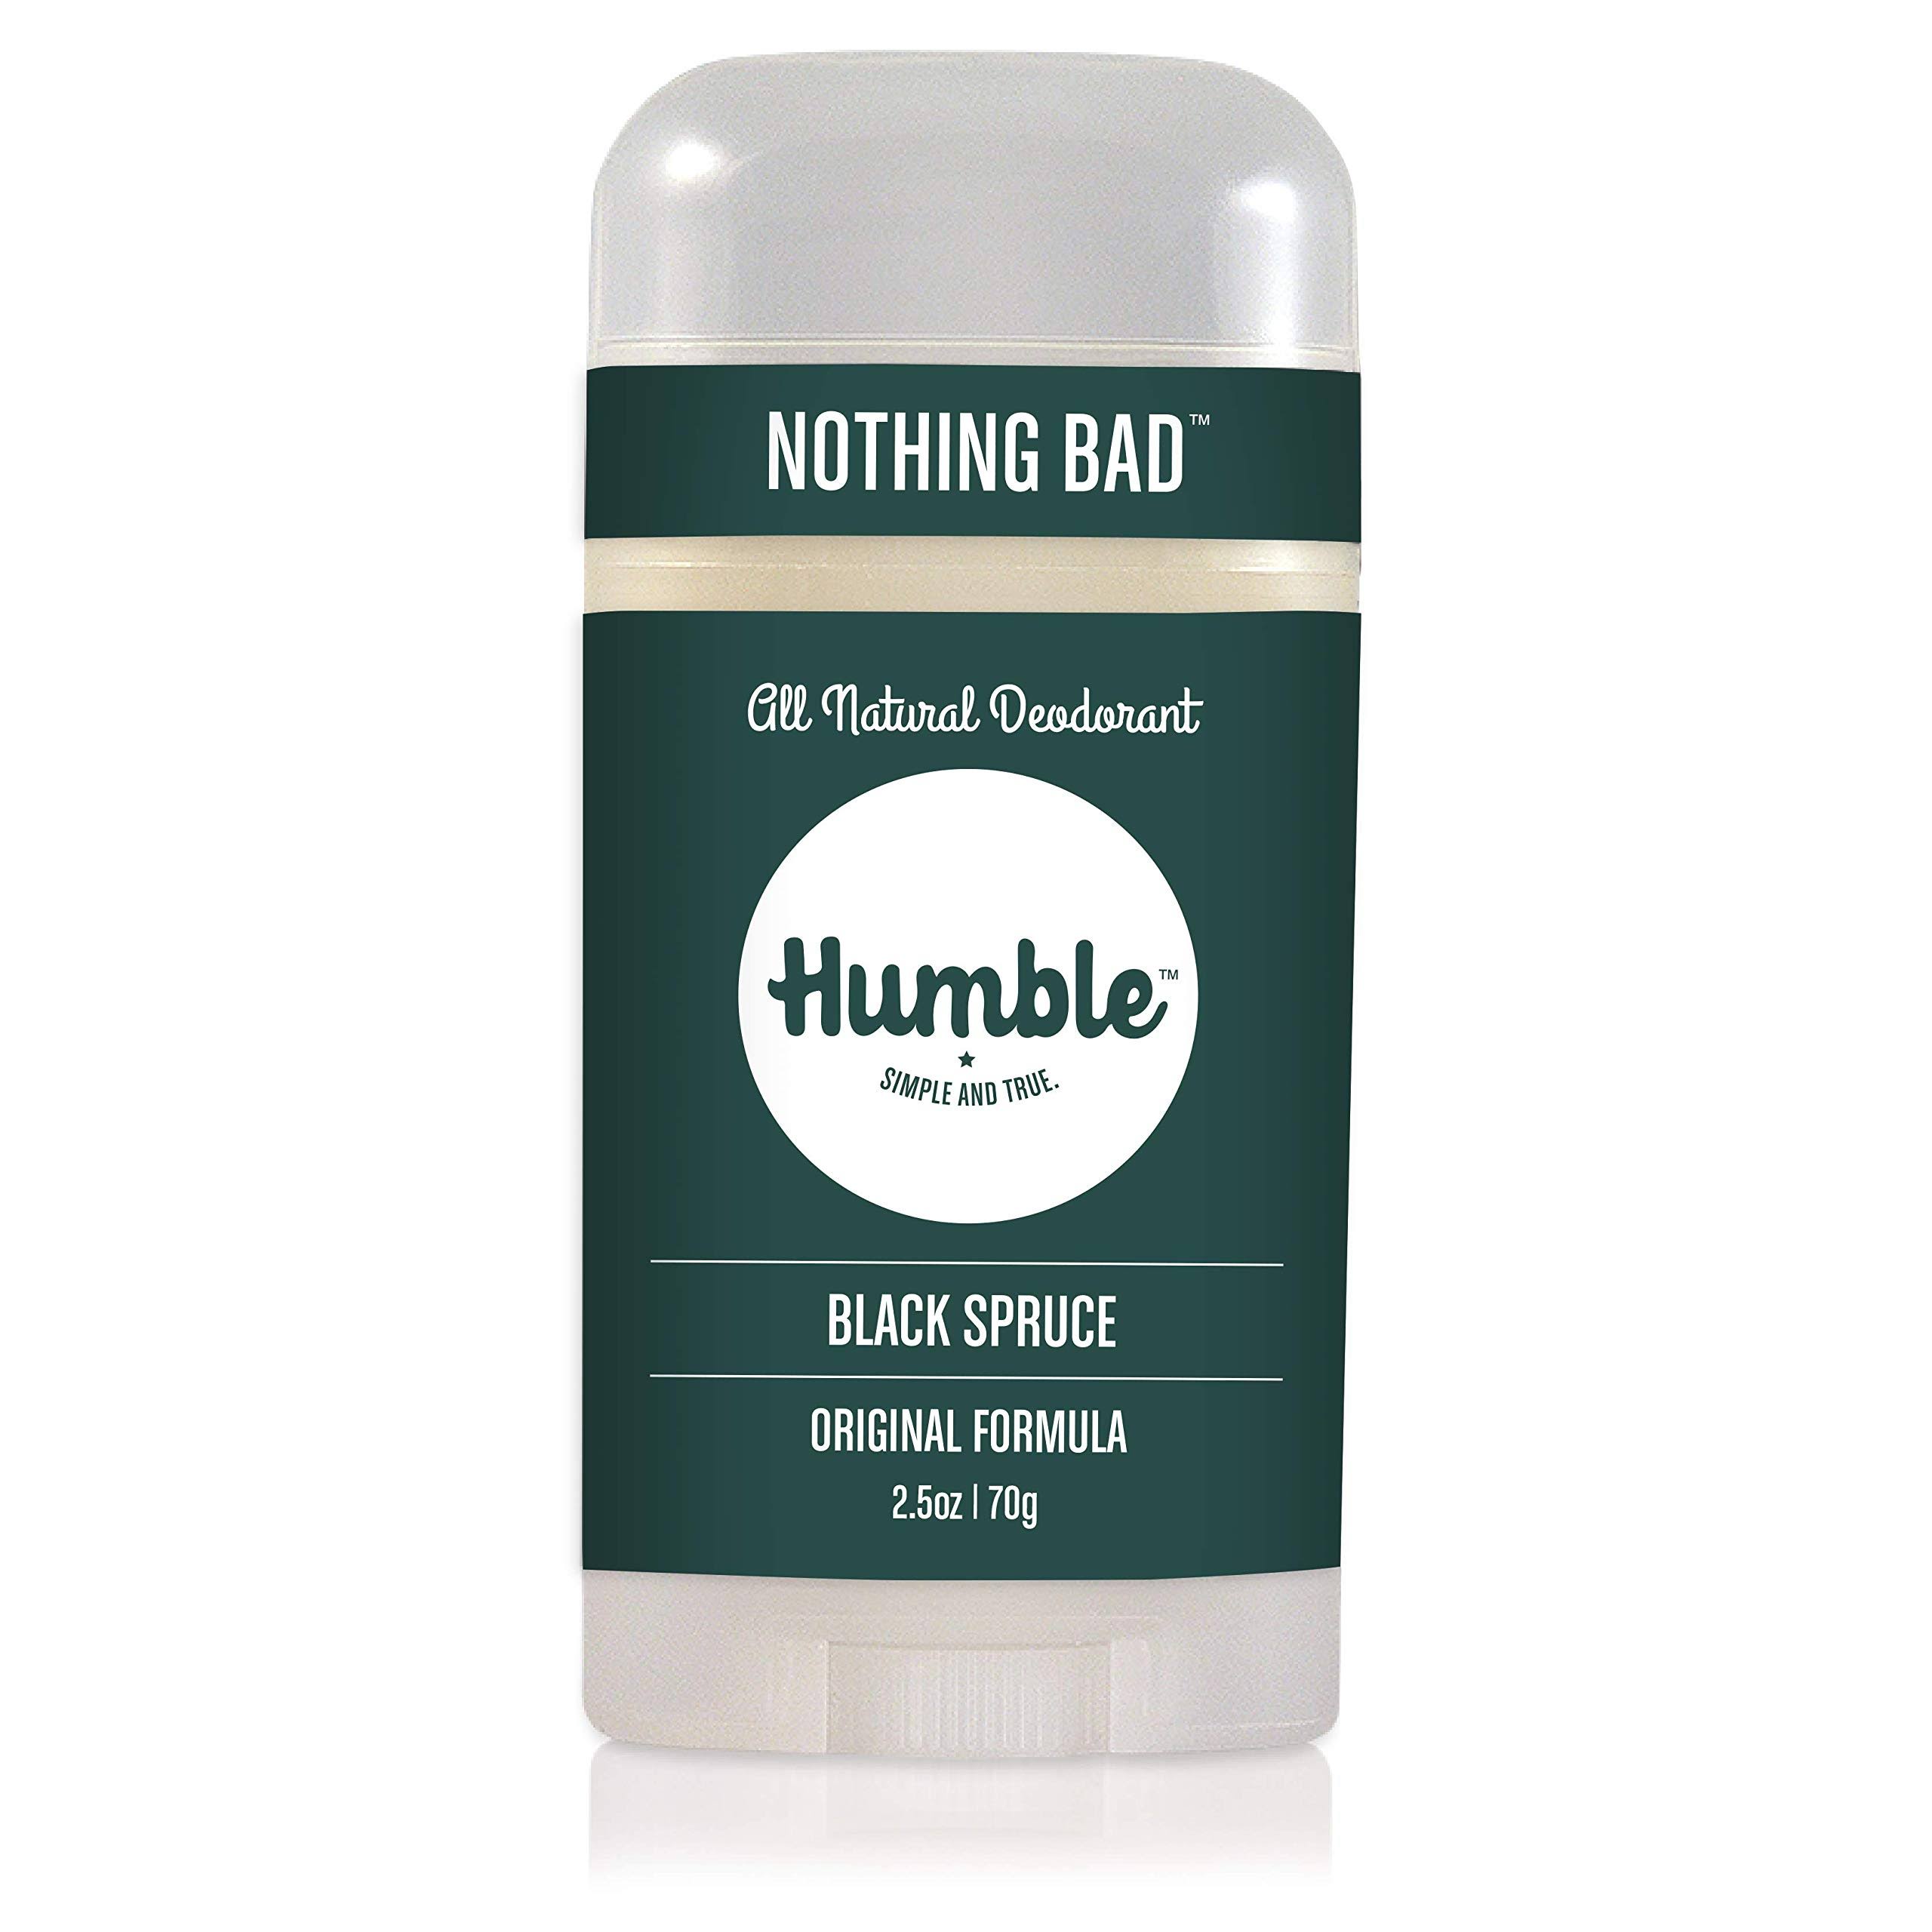 Humble Deodorant - all natural deodorant | Black spruce standard